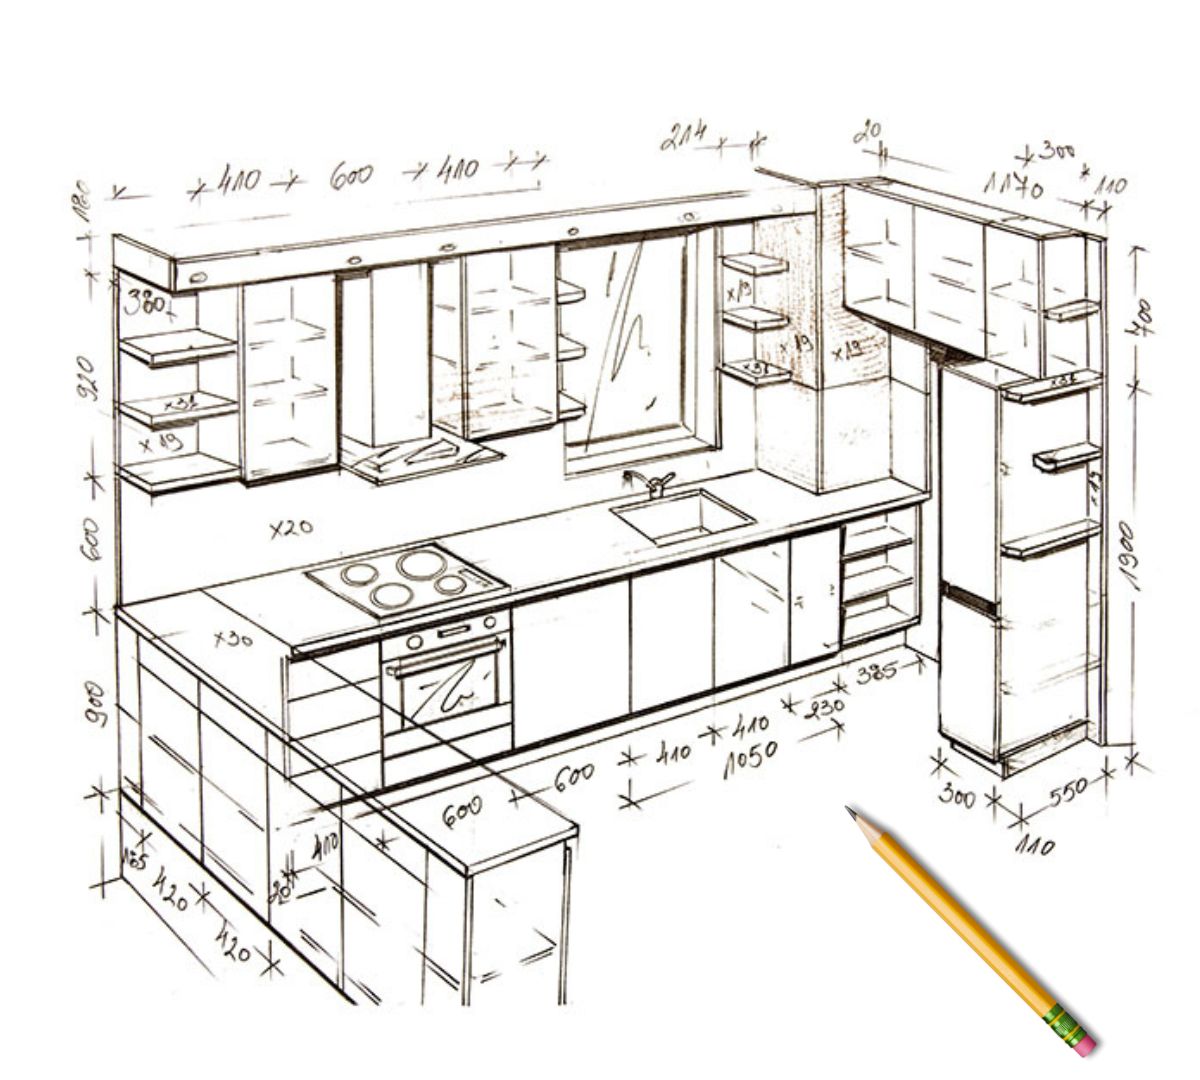 Revolutionize Your Home: The Top Benefits of Modular Kitchen Design